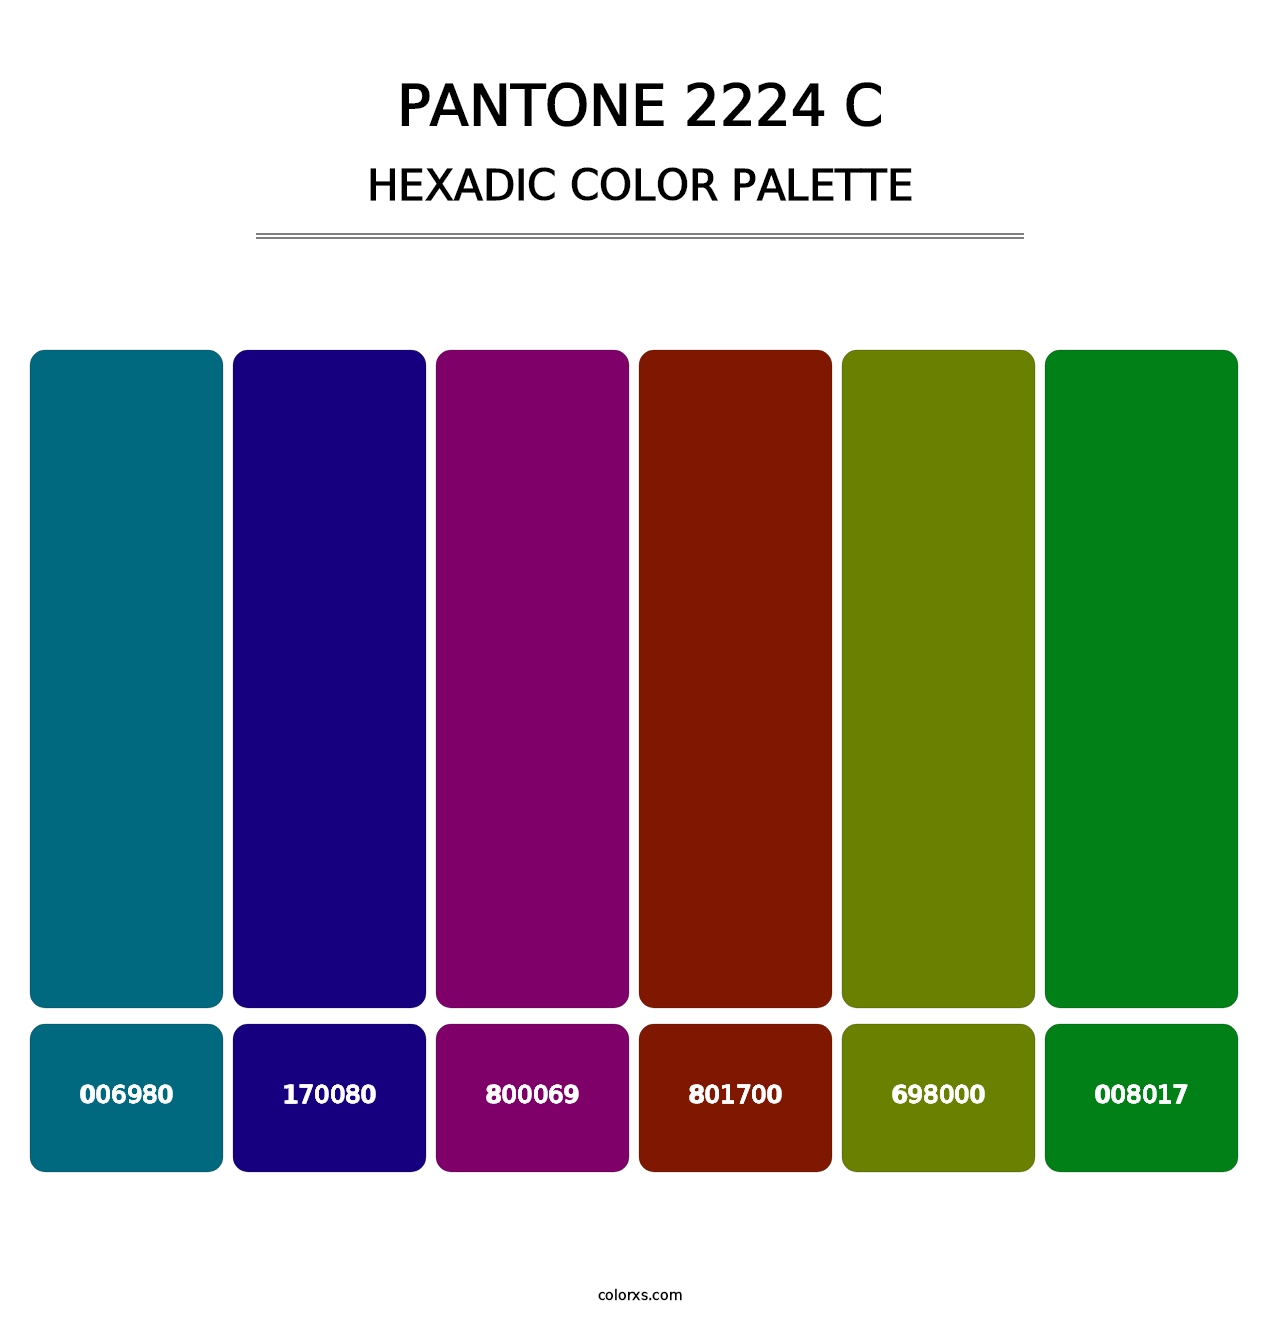 PANTONE 2224 C - Hexadic Color Palette